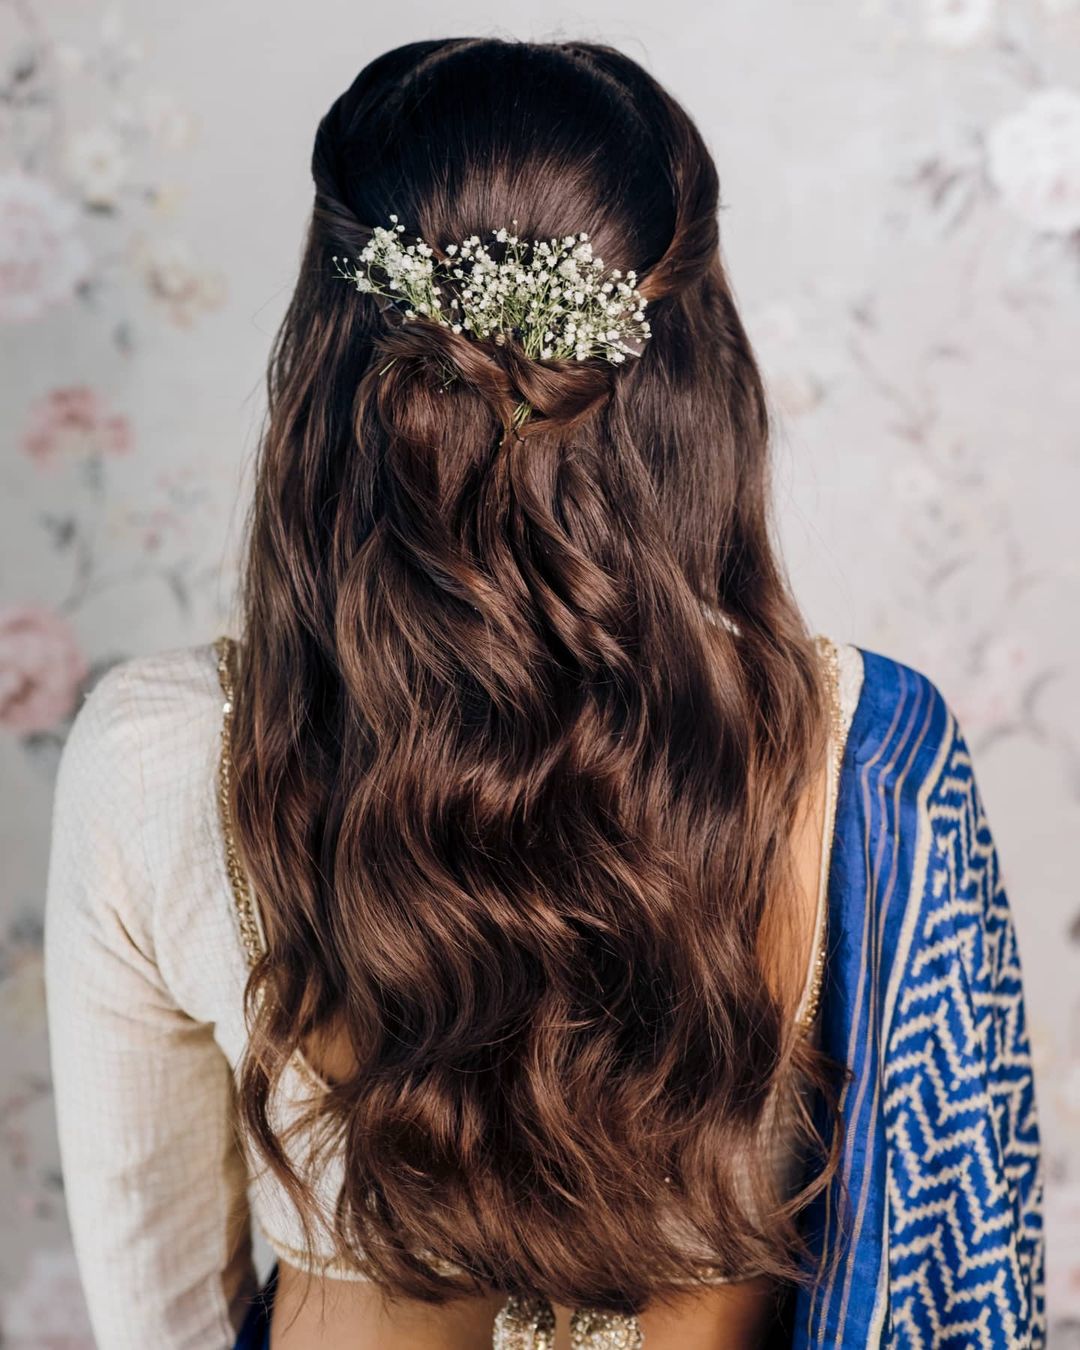 Premium Photo | Indian woman wearing saree and beautiful braided hairdo